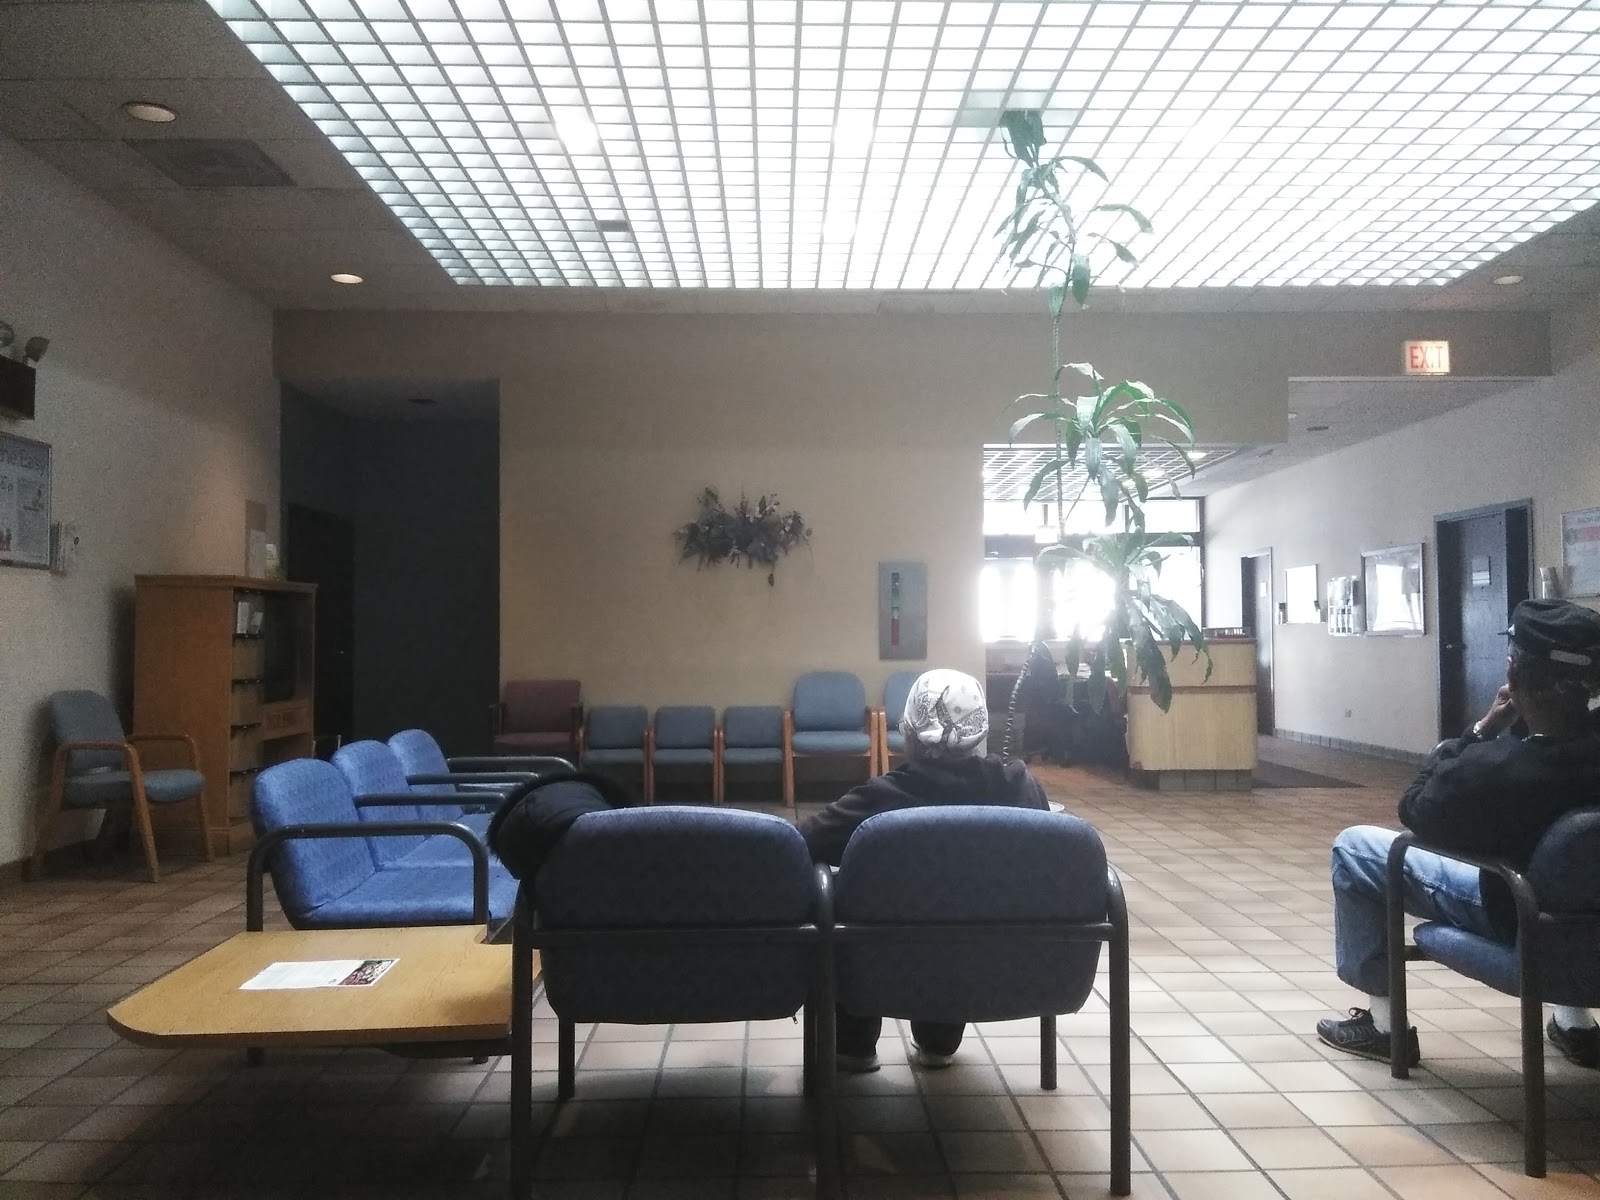 Grayken Center for Treatment at South Shore Hospital